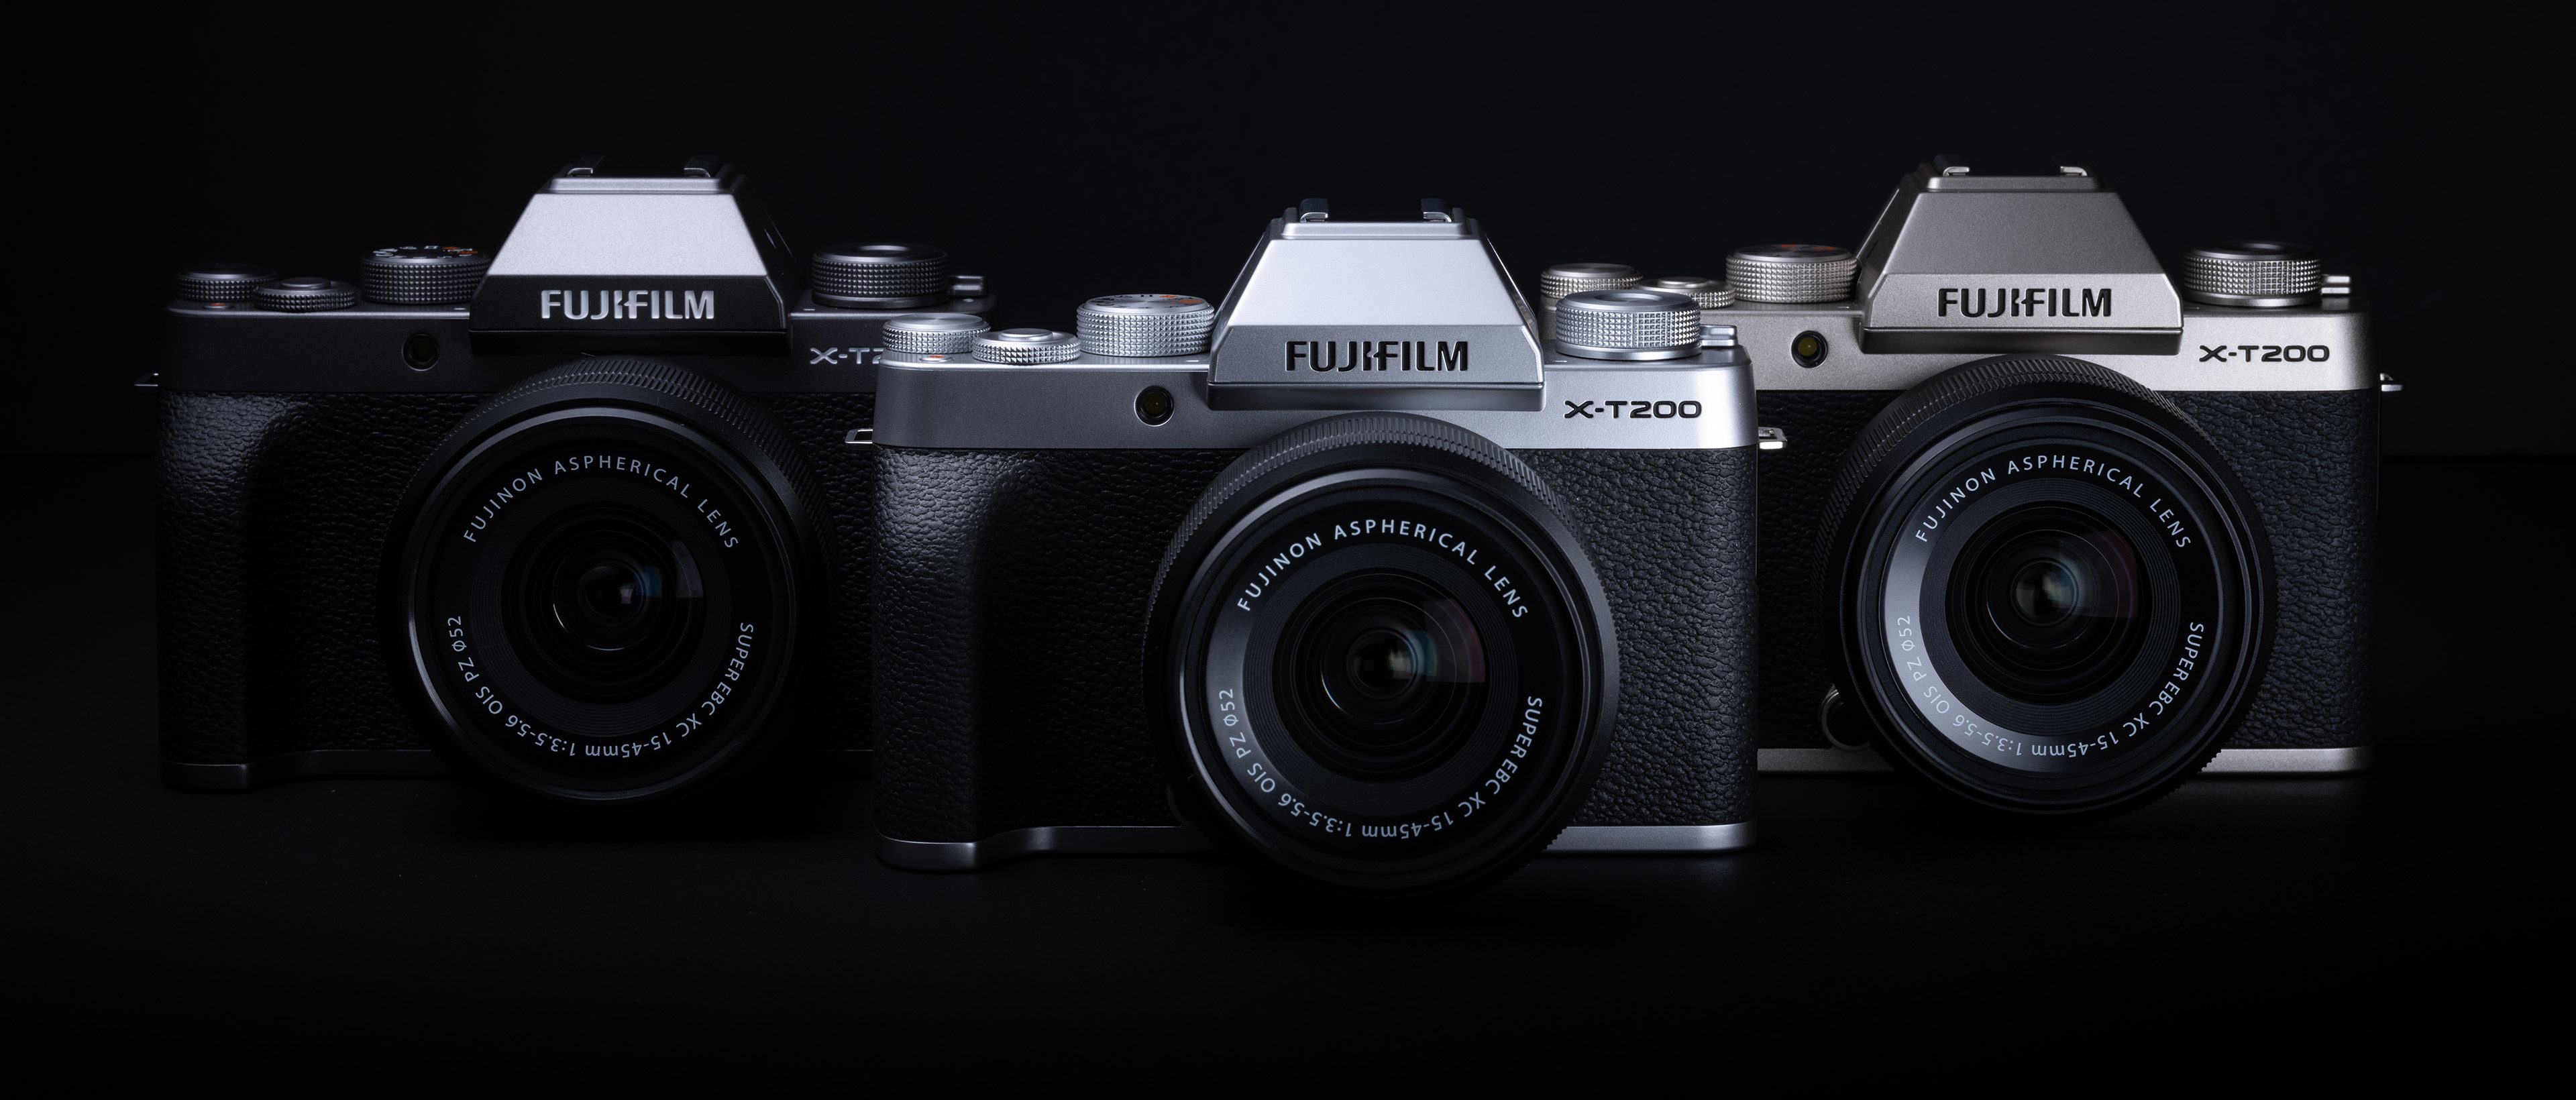 Preview Image: Die neue Fujifilm X-T200